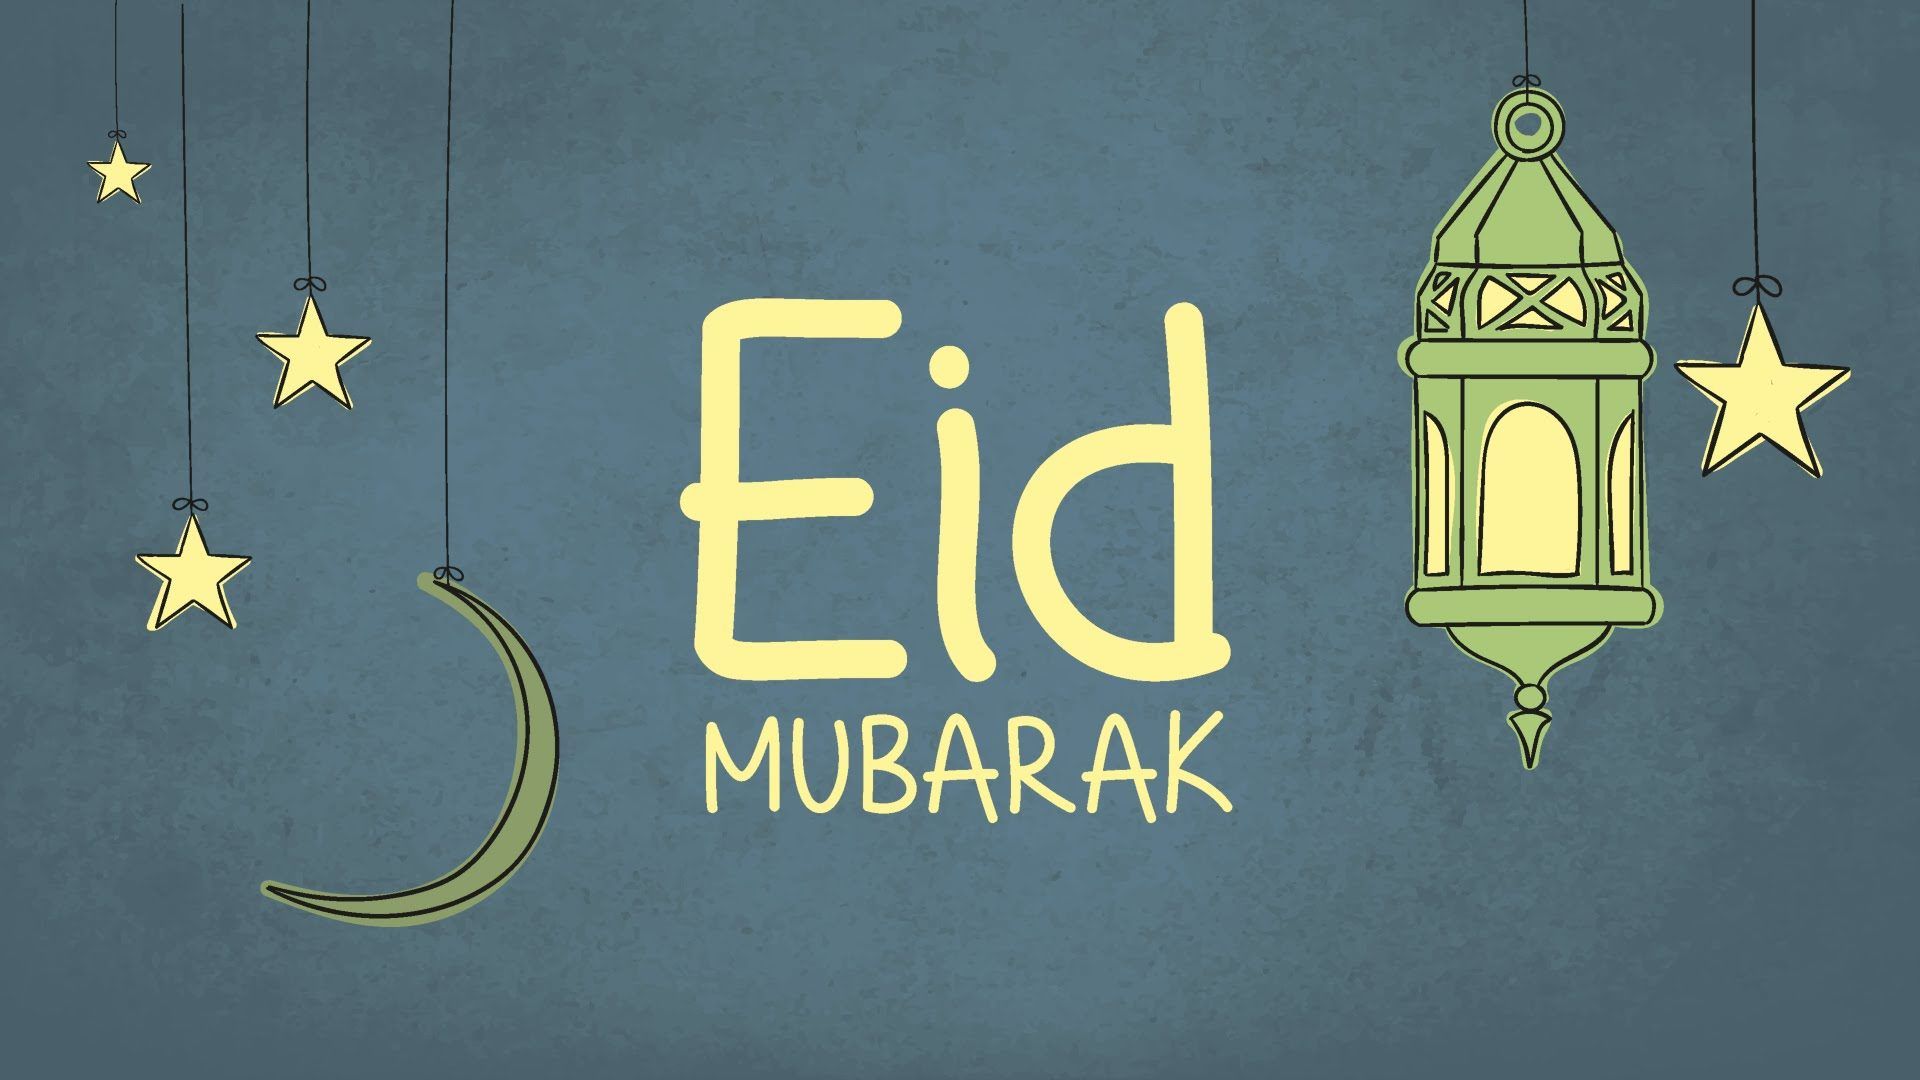 Eid Mubarak Wallpaper 2017 for Facebook, Twitter, Instagram